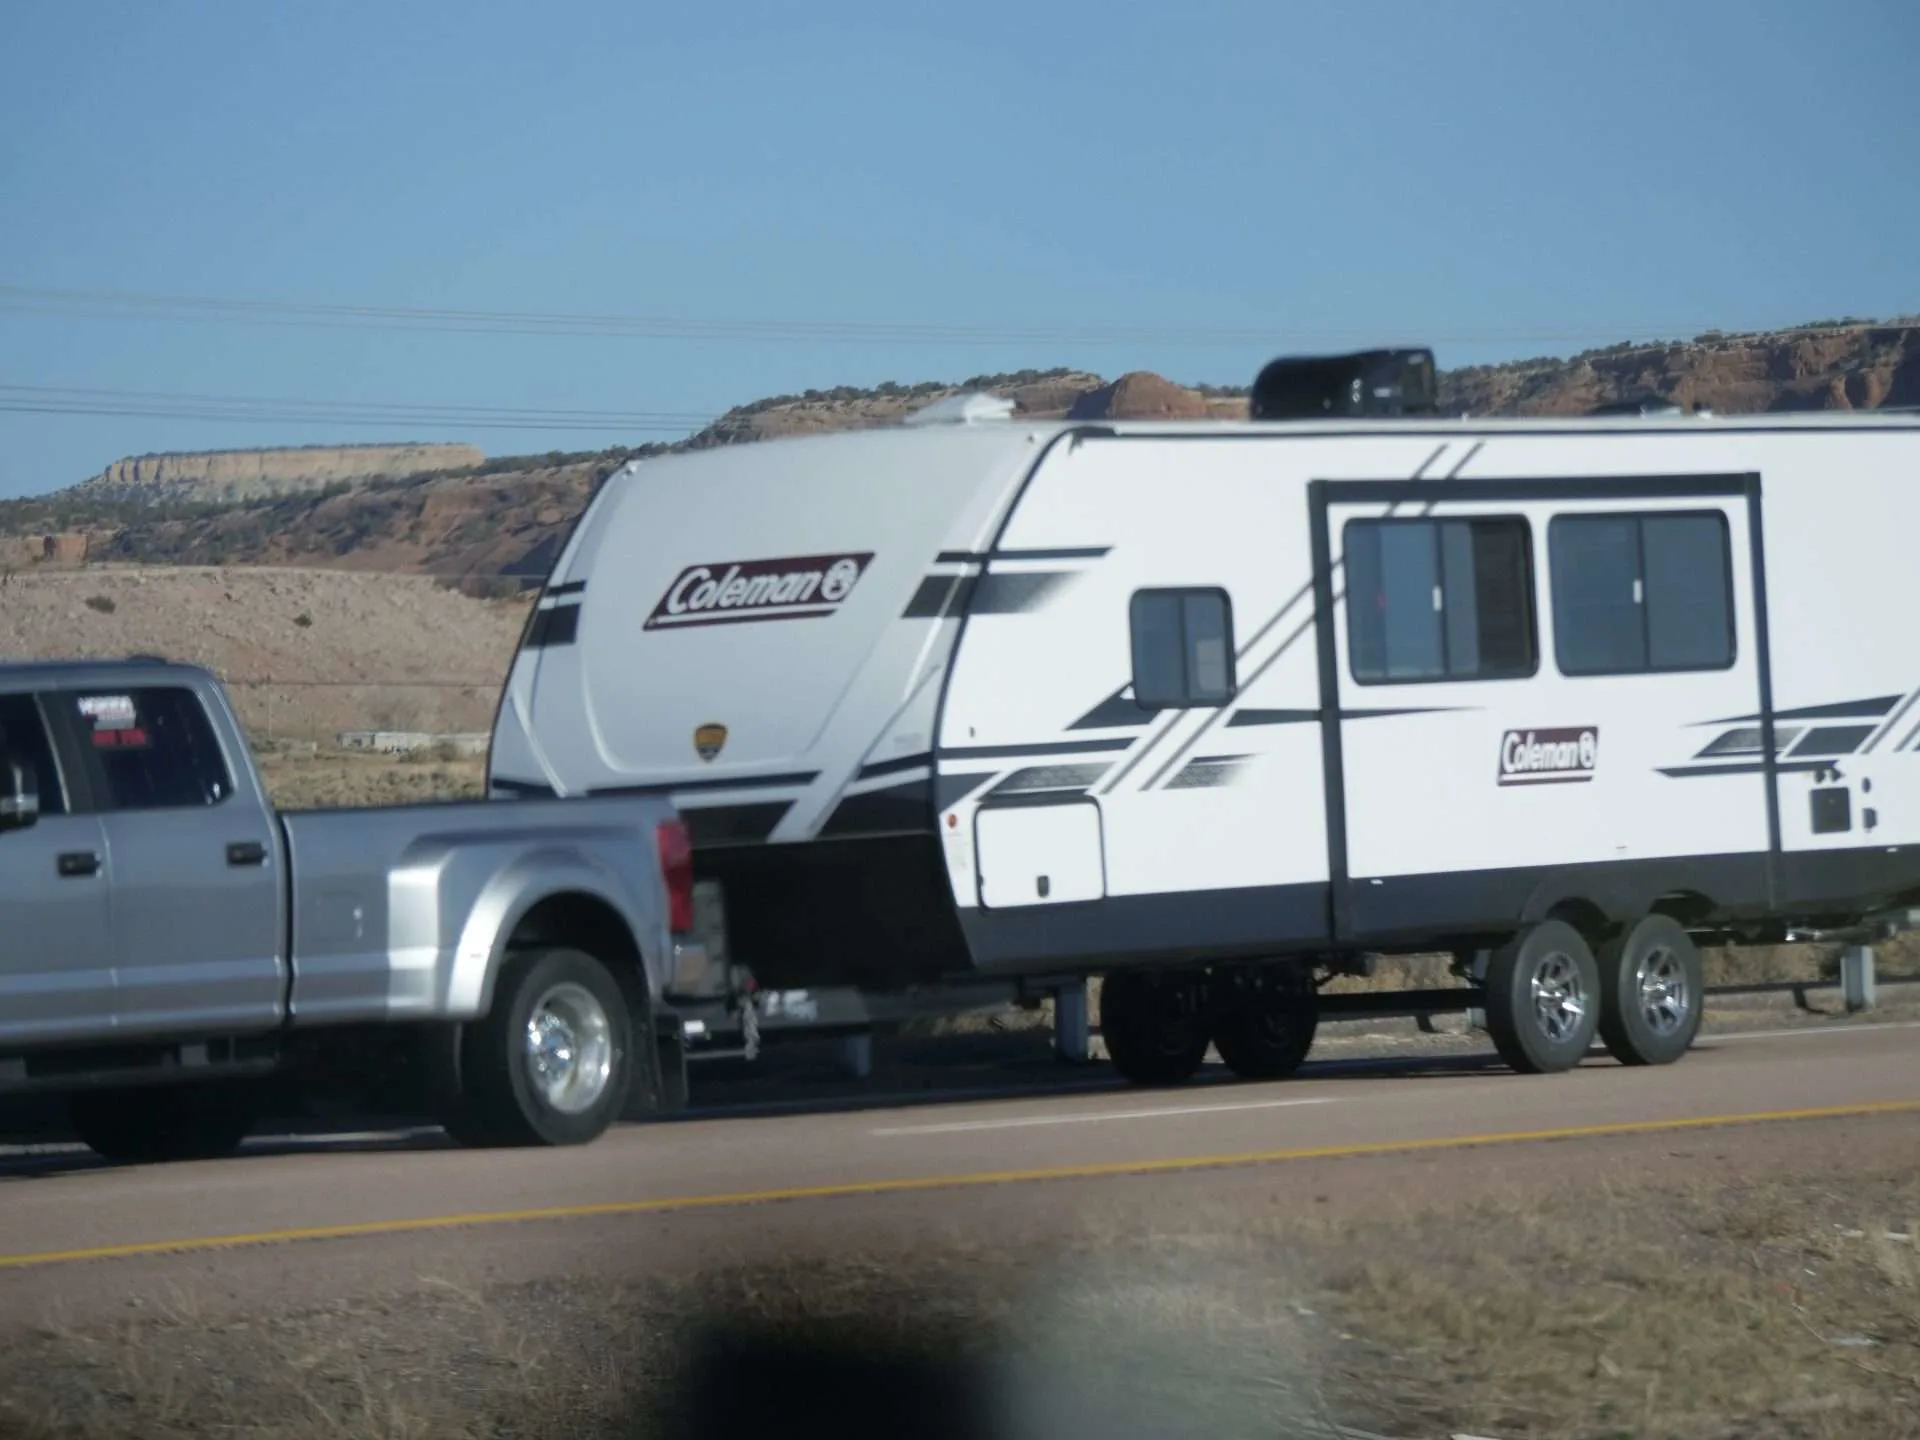 Truck towing Coleman camper